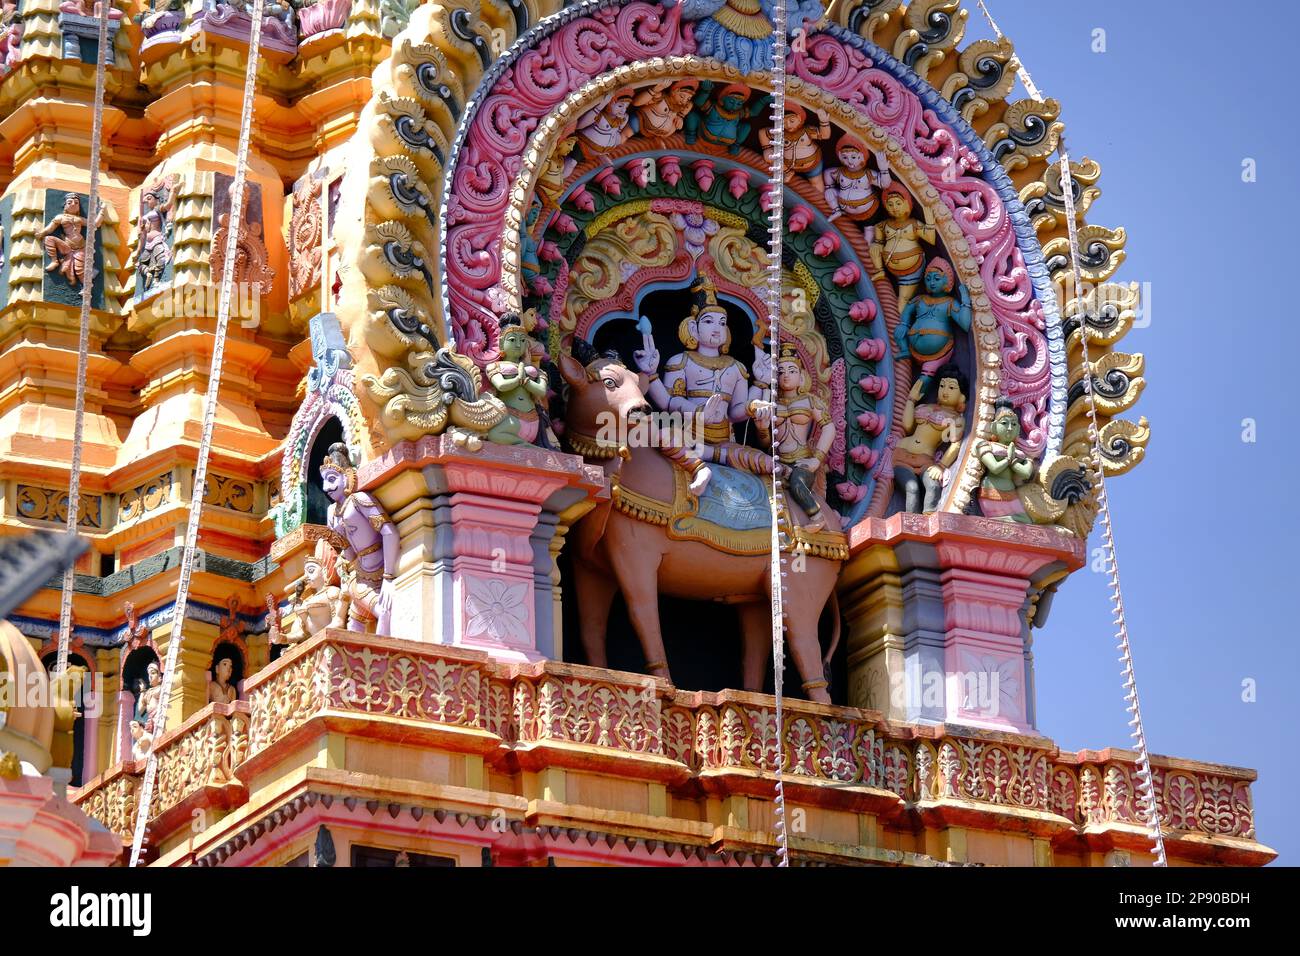 19. Februar 2023, Shikhar Shingnapur Tempel ein antiker Shiva Tempel rund 45 km von Satara, Maharashtra, Indien. Stockfoto